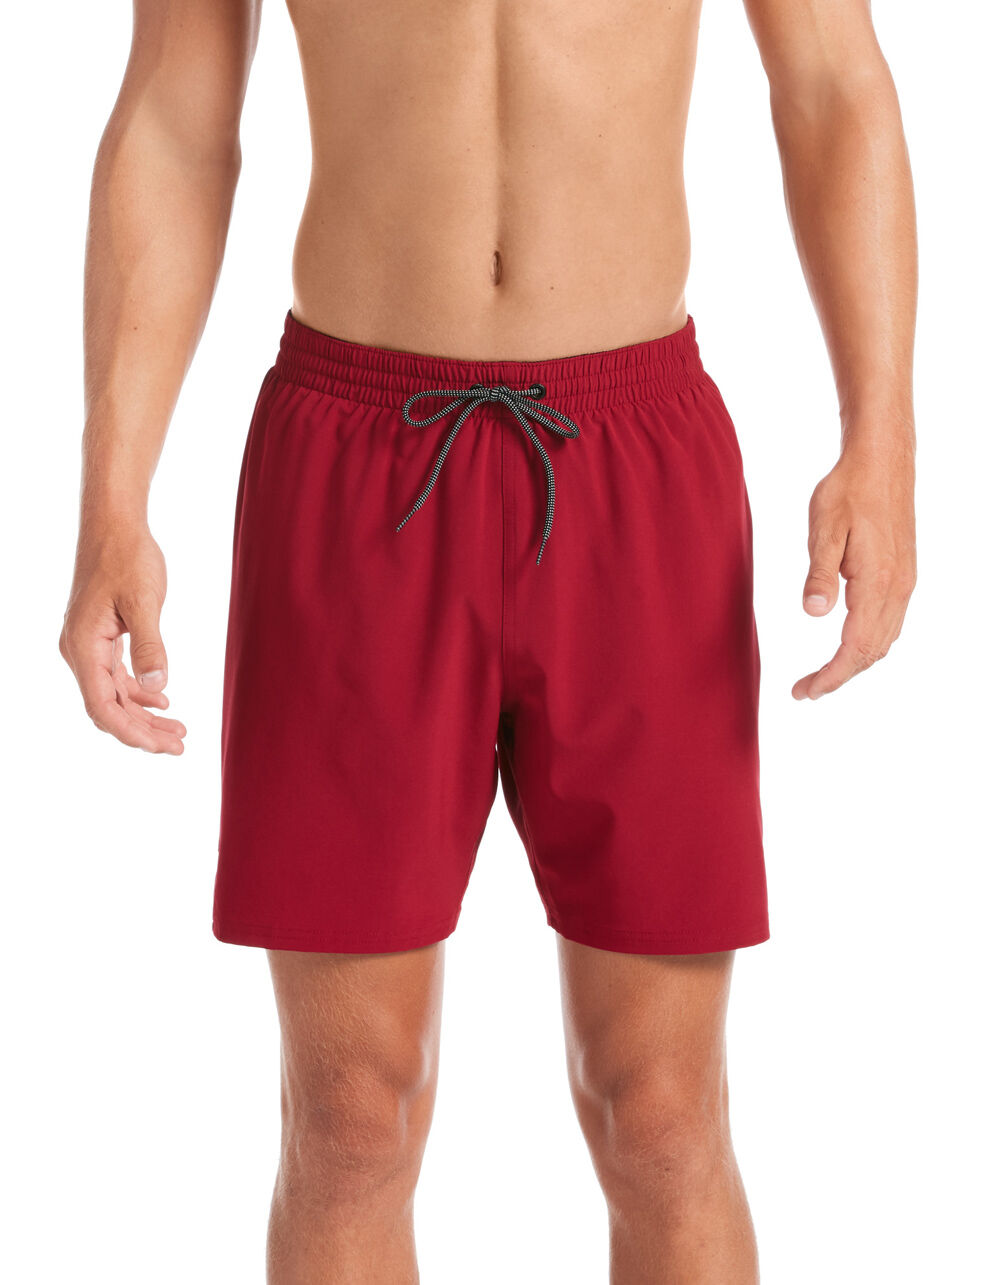 NIKE Solid Mens Red Boardshorts image number 2